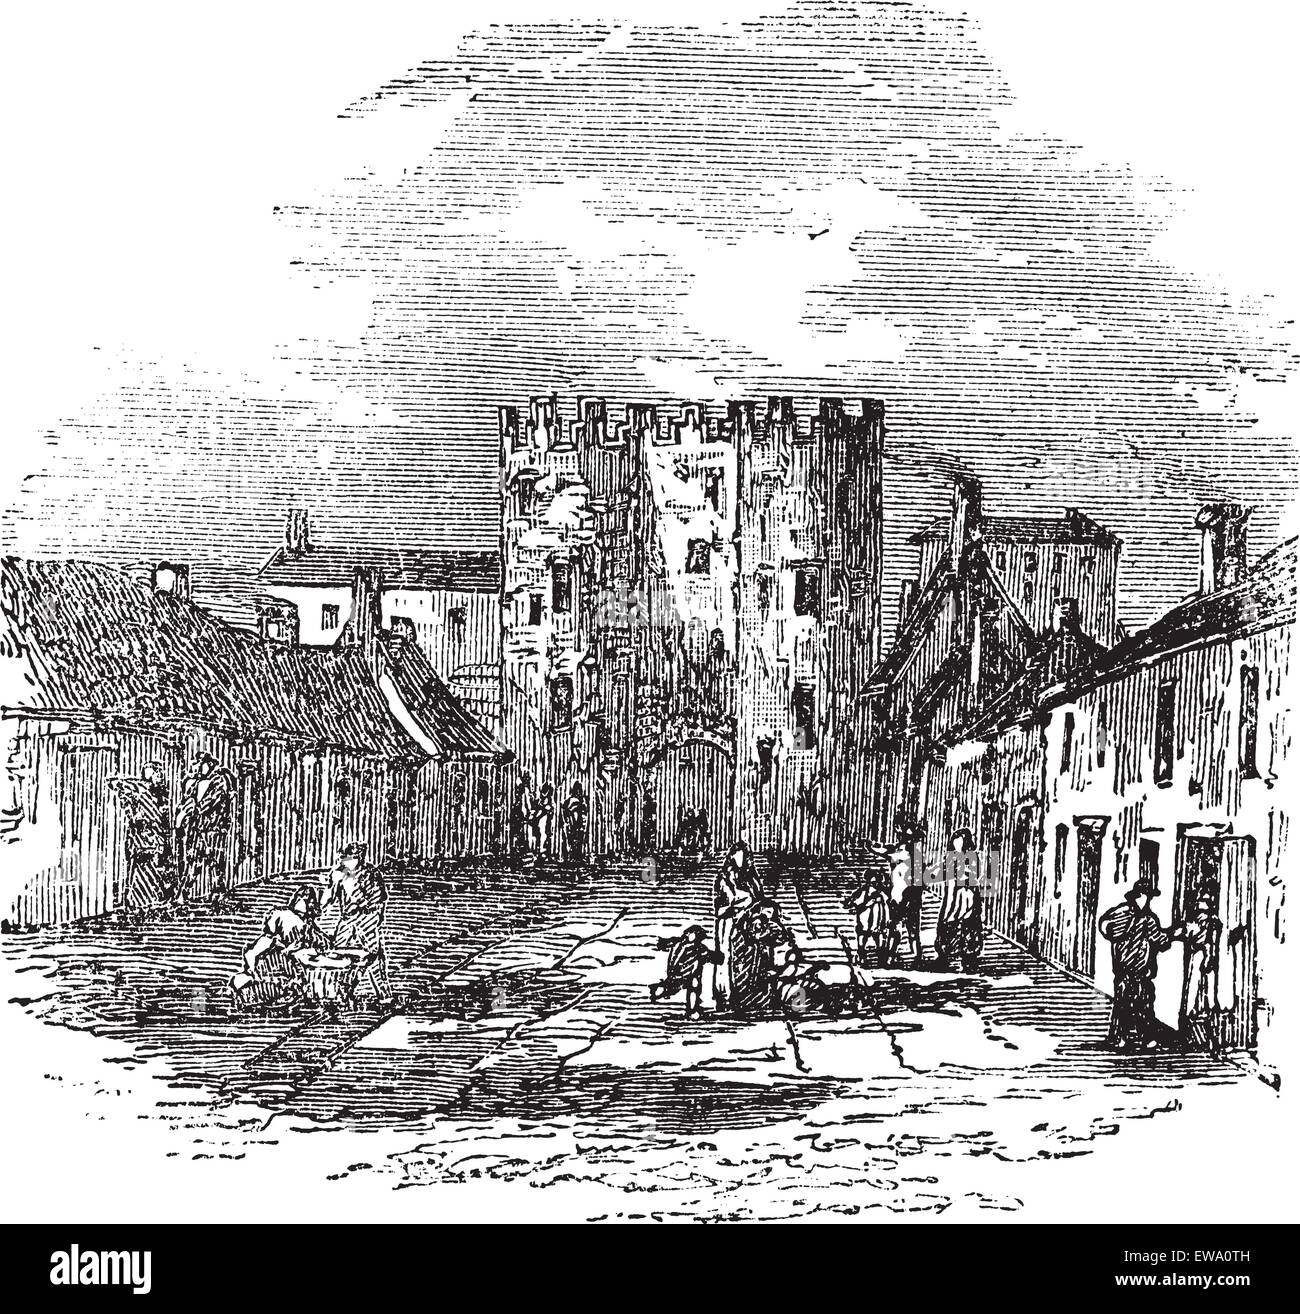 Drogheda in Leinster, Ireland, during the 1890s, vintage engraving. Old engraved illustration of Drogheda showing Saint Lawrence's Gate. Stock Vector